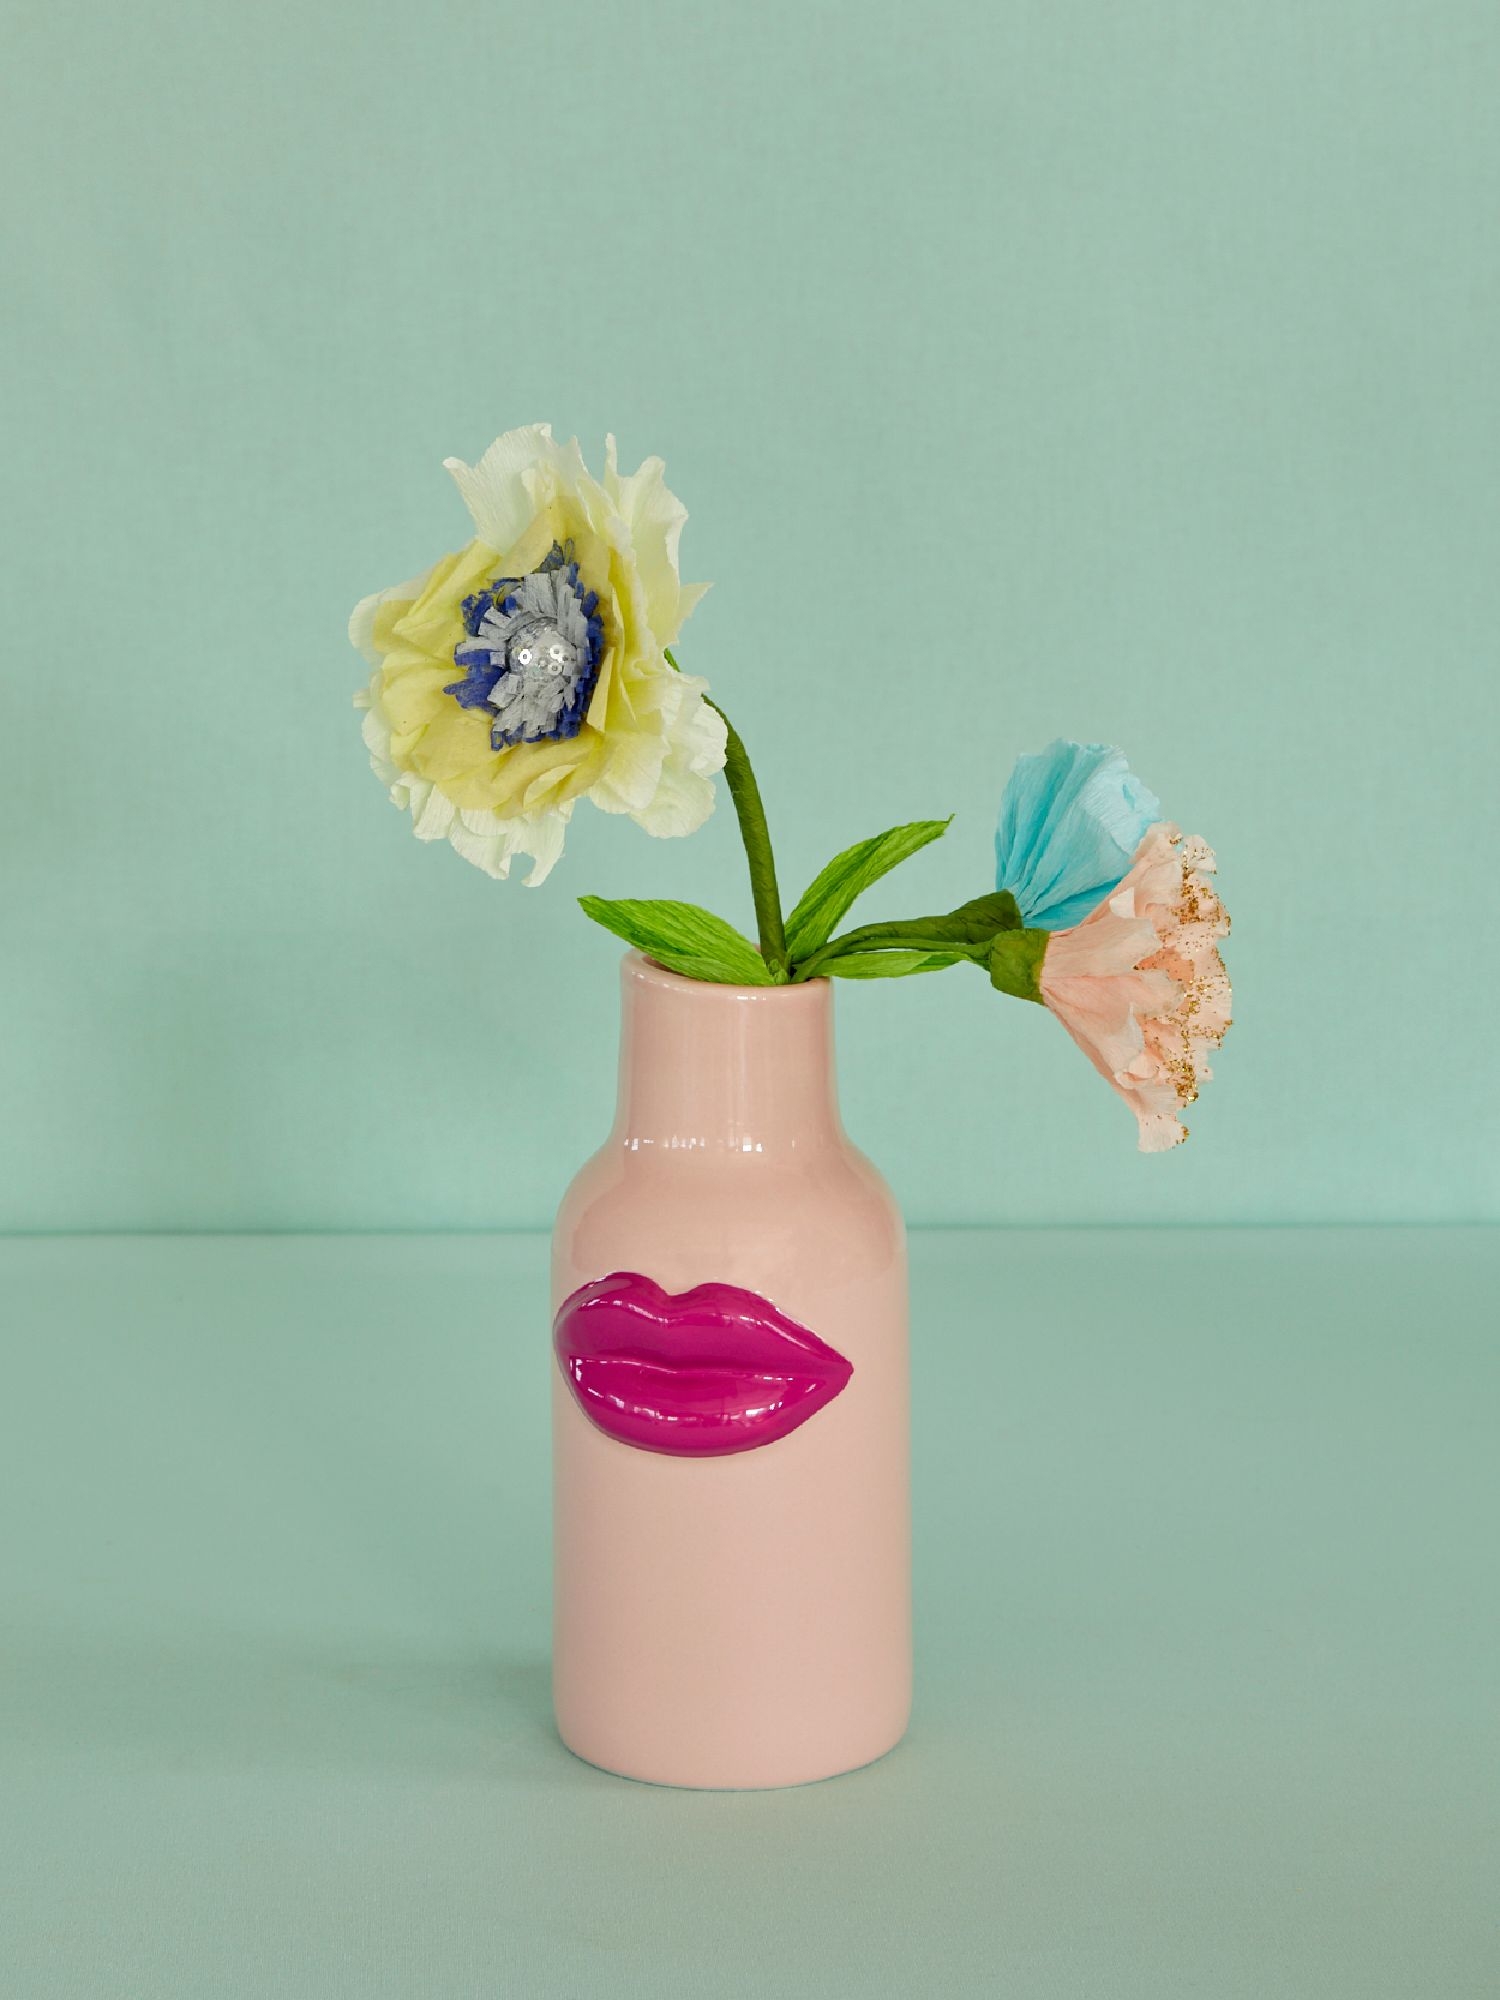 RICE Vase Lips Keramik rosa/pink